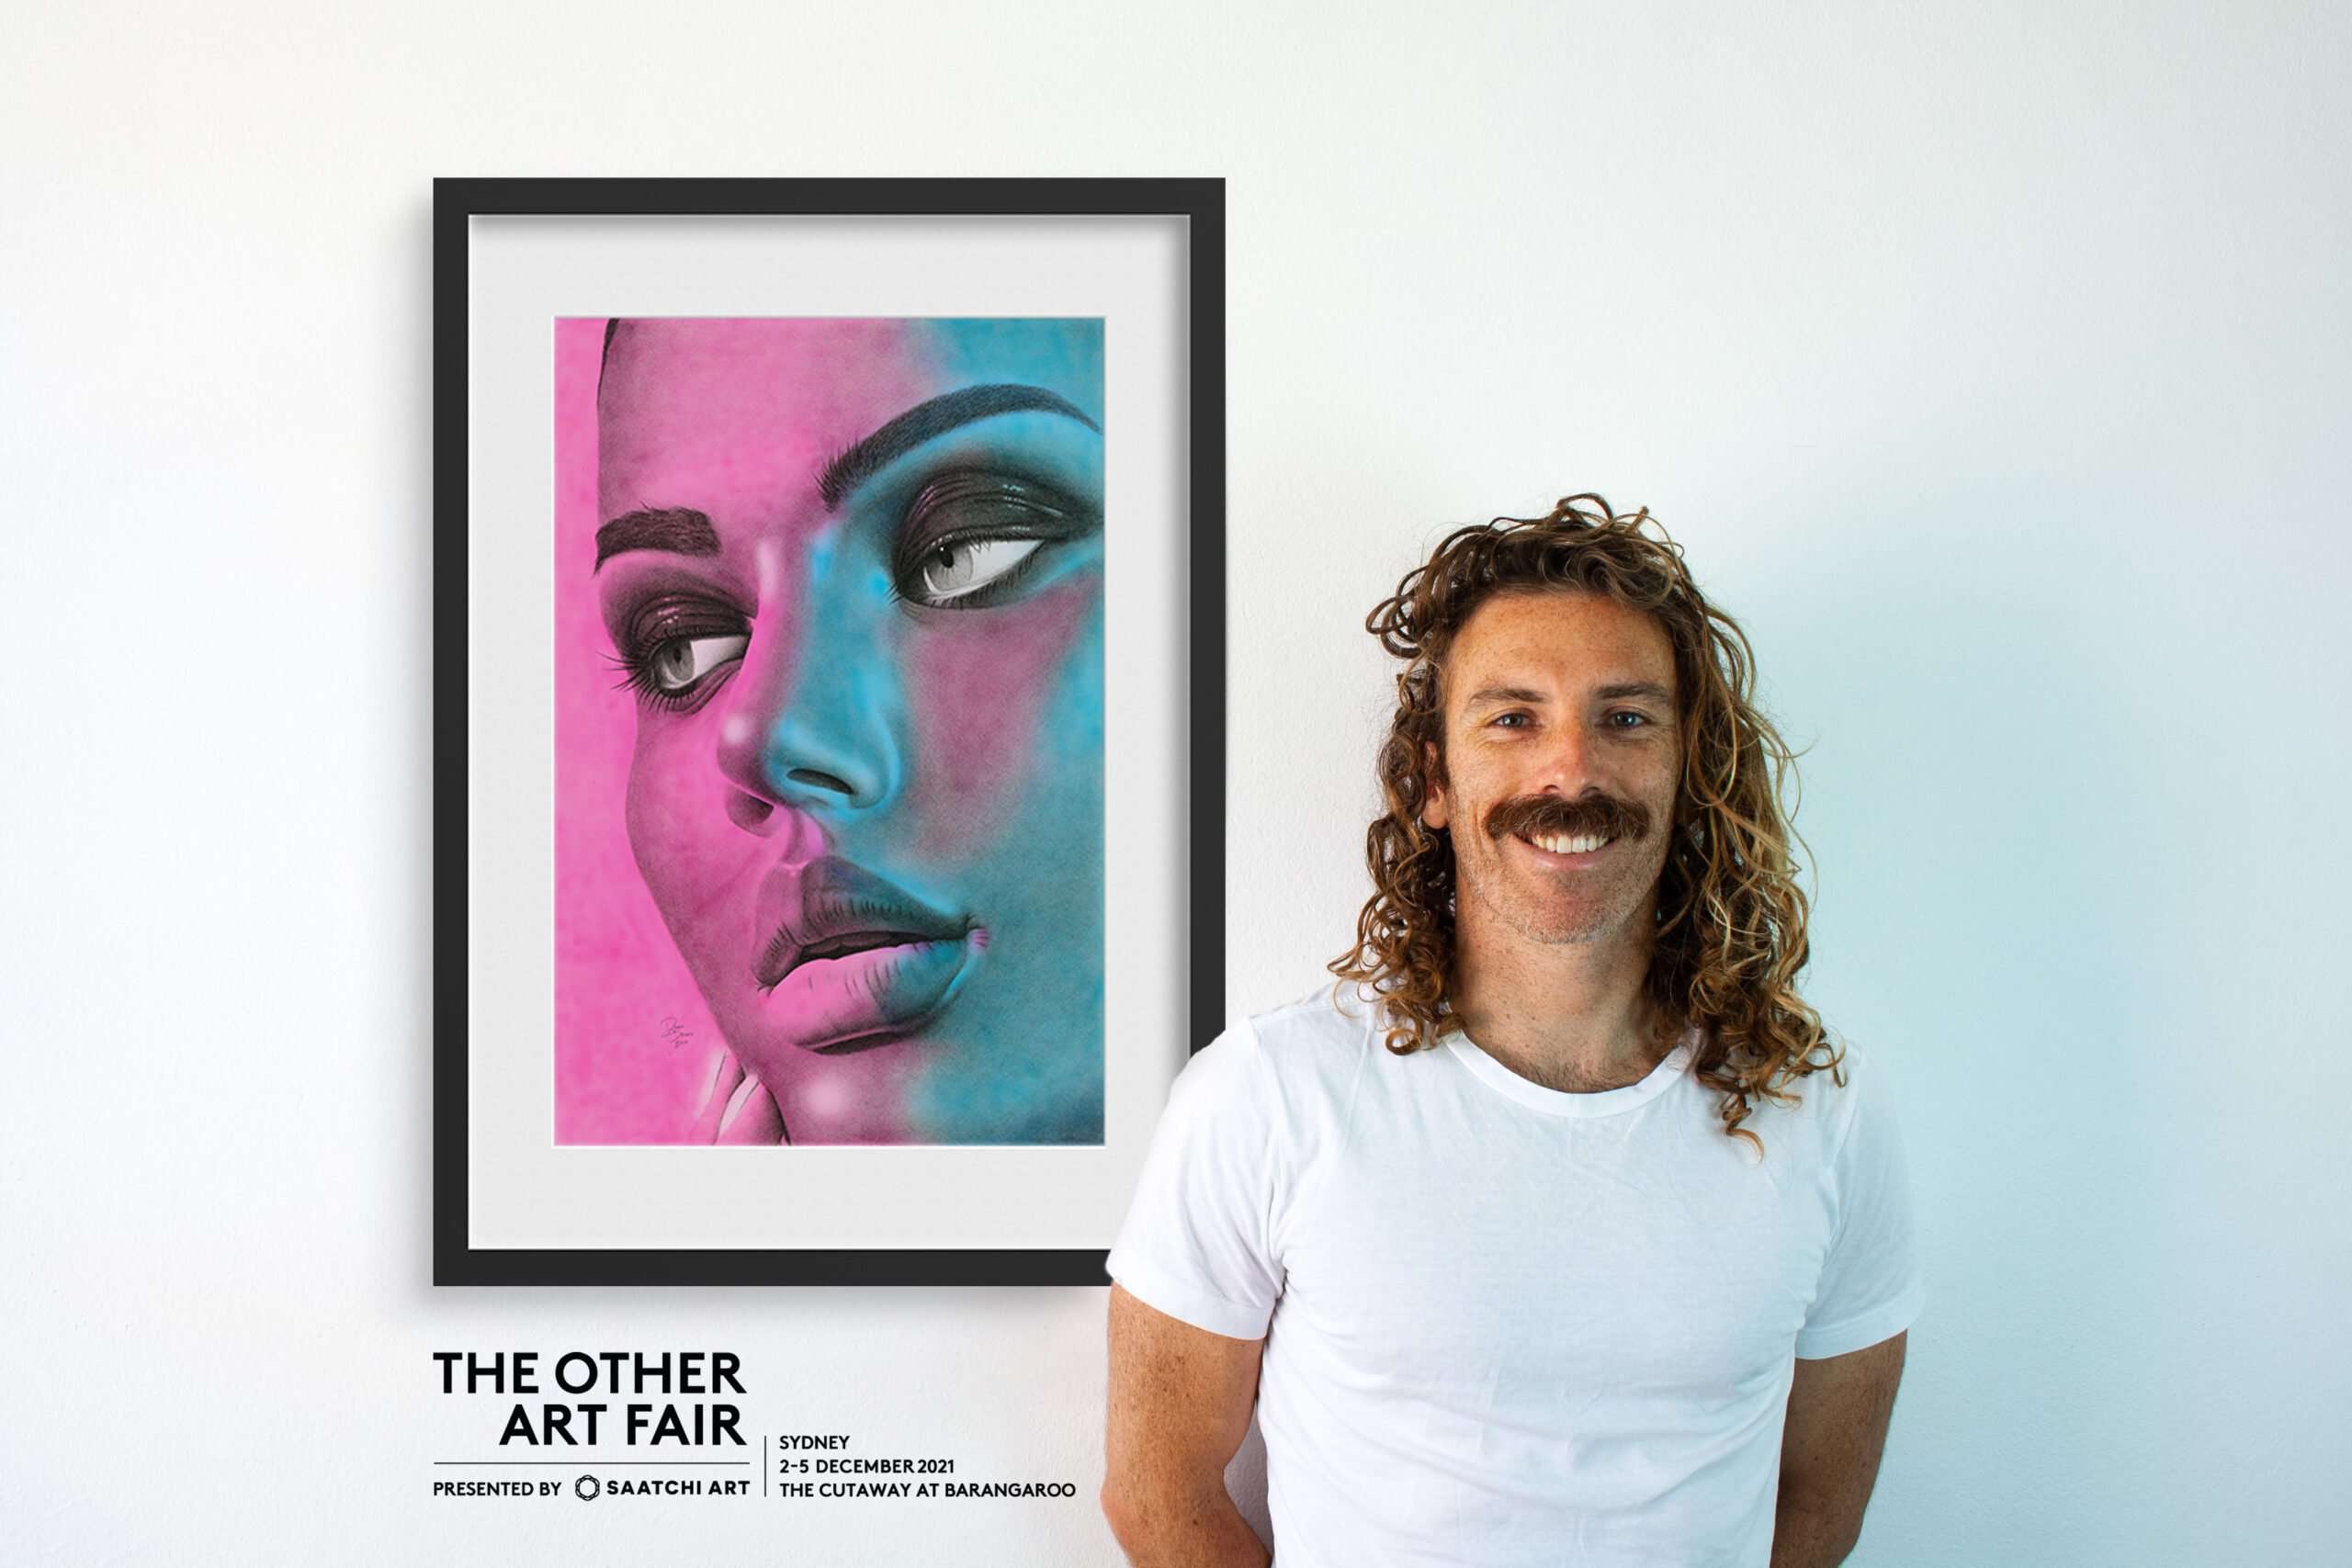 Show Announcement: The Other Art Fair Sydney